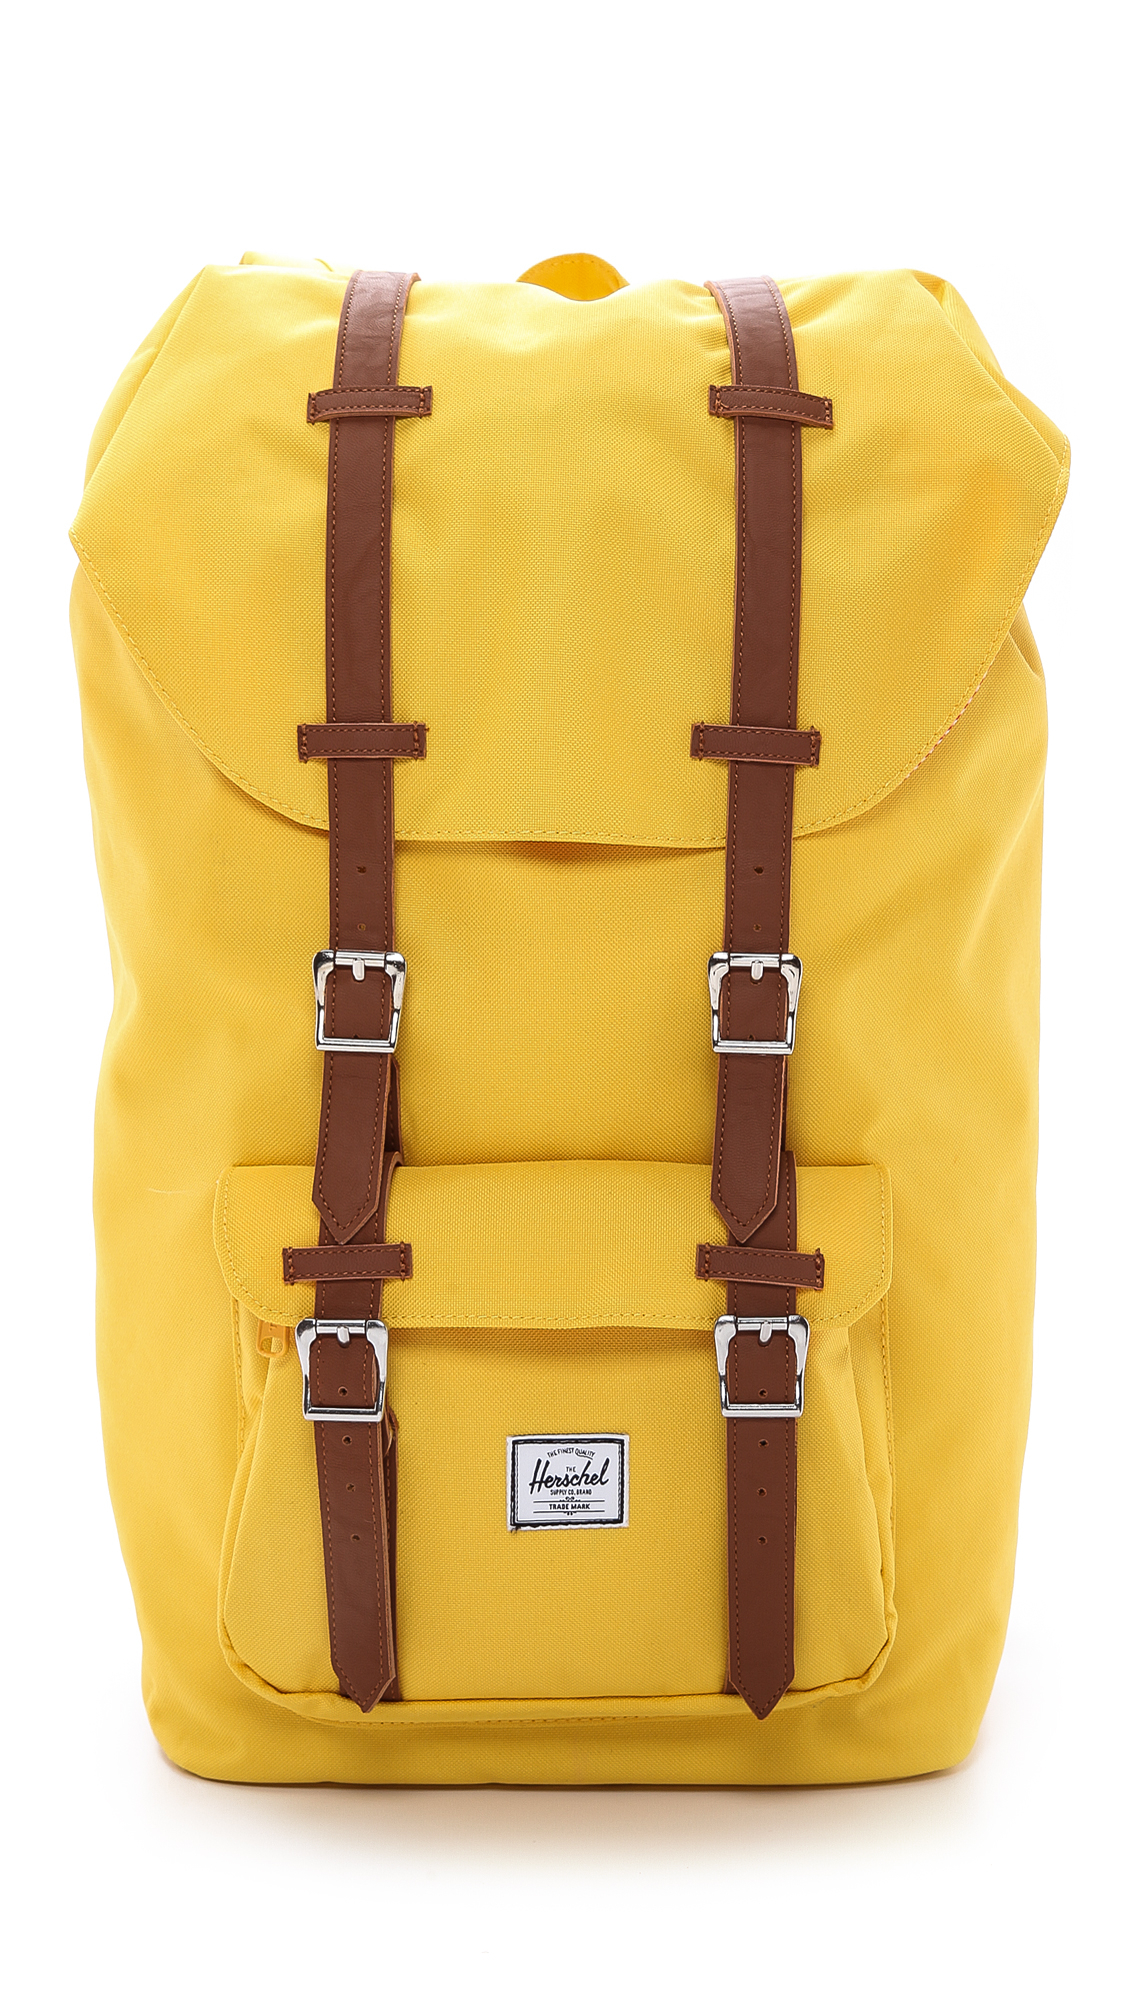 Lyst - Herschel Supply Co. Little America Backpack in Yellow for Men